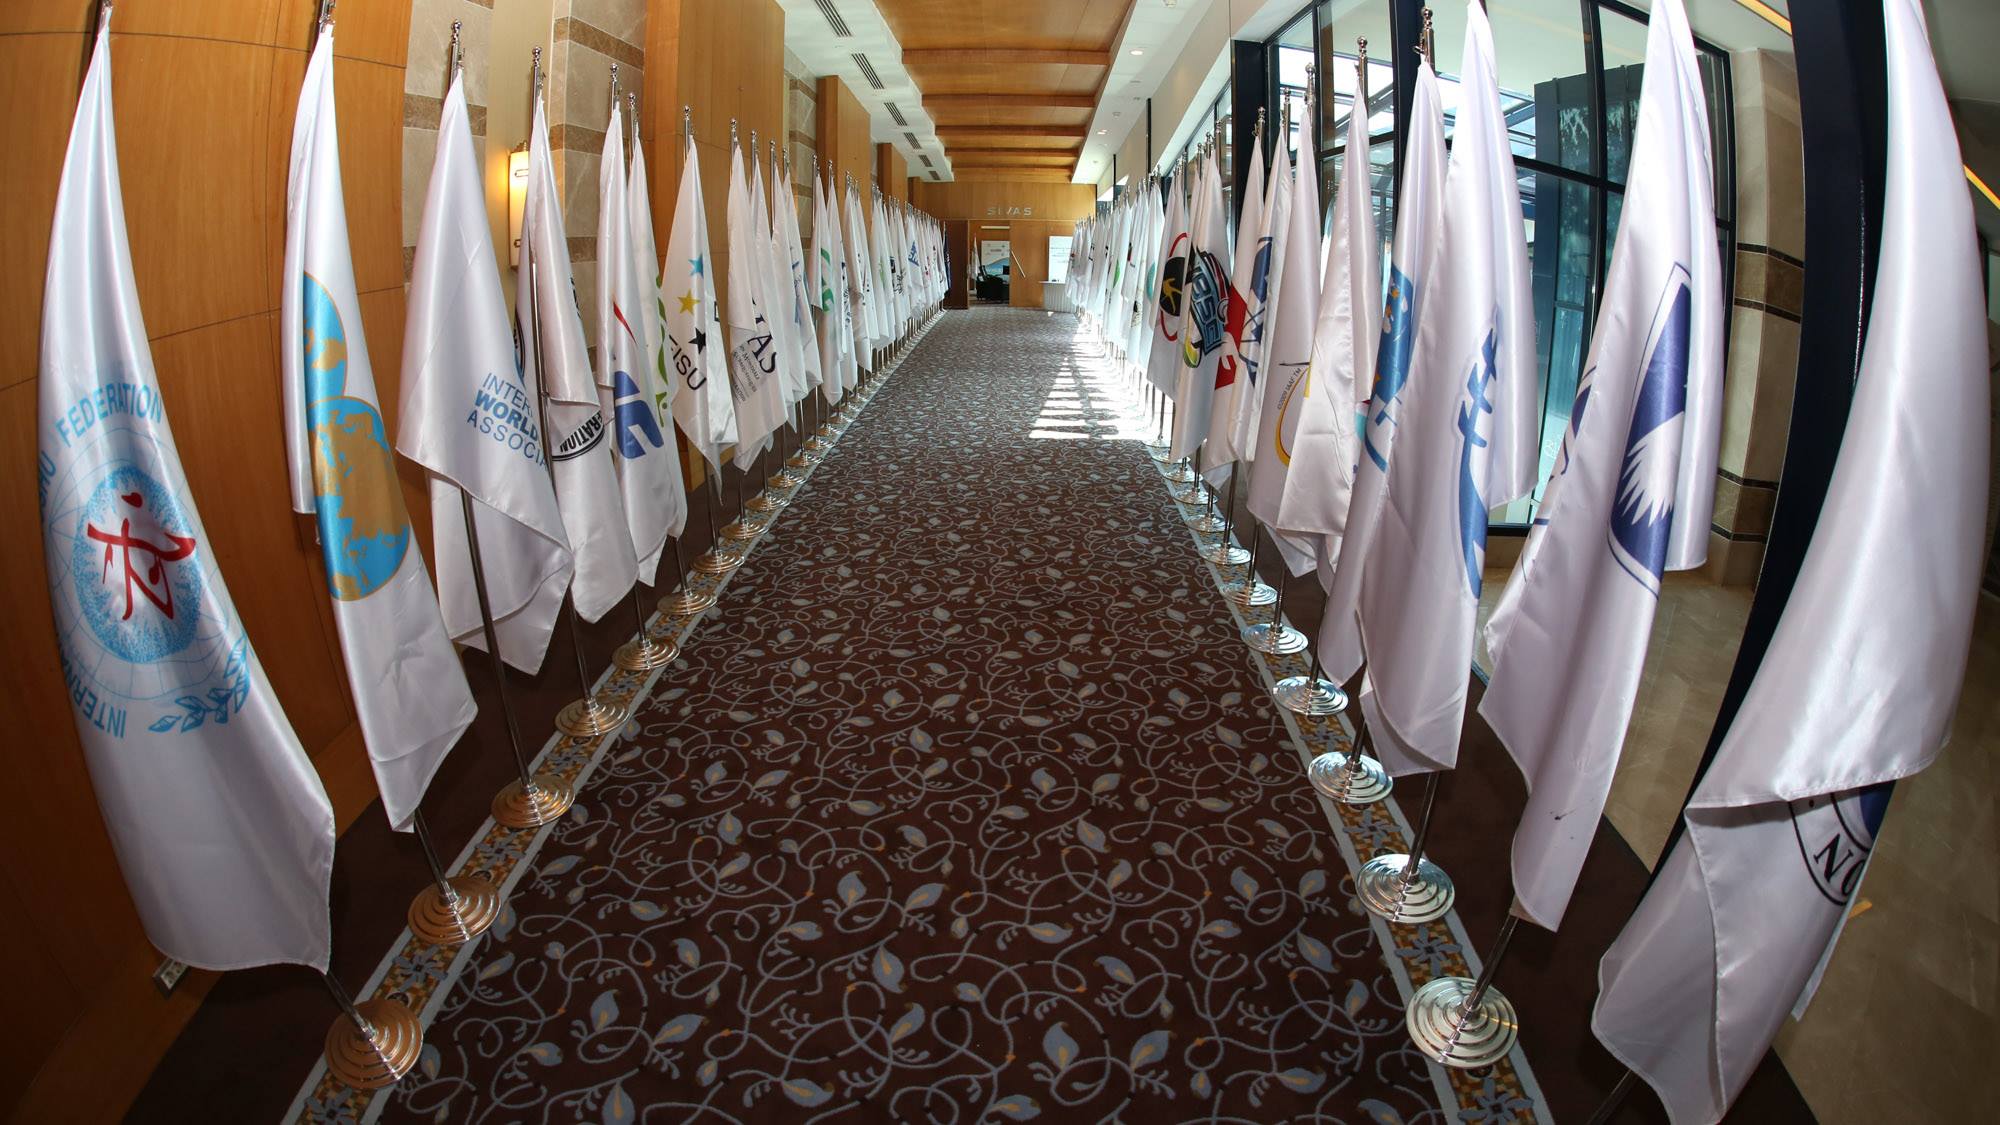 SportAccord Convention 2014, Belek/Antalya, Turkey